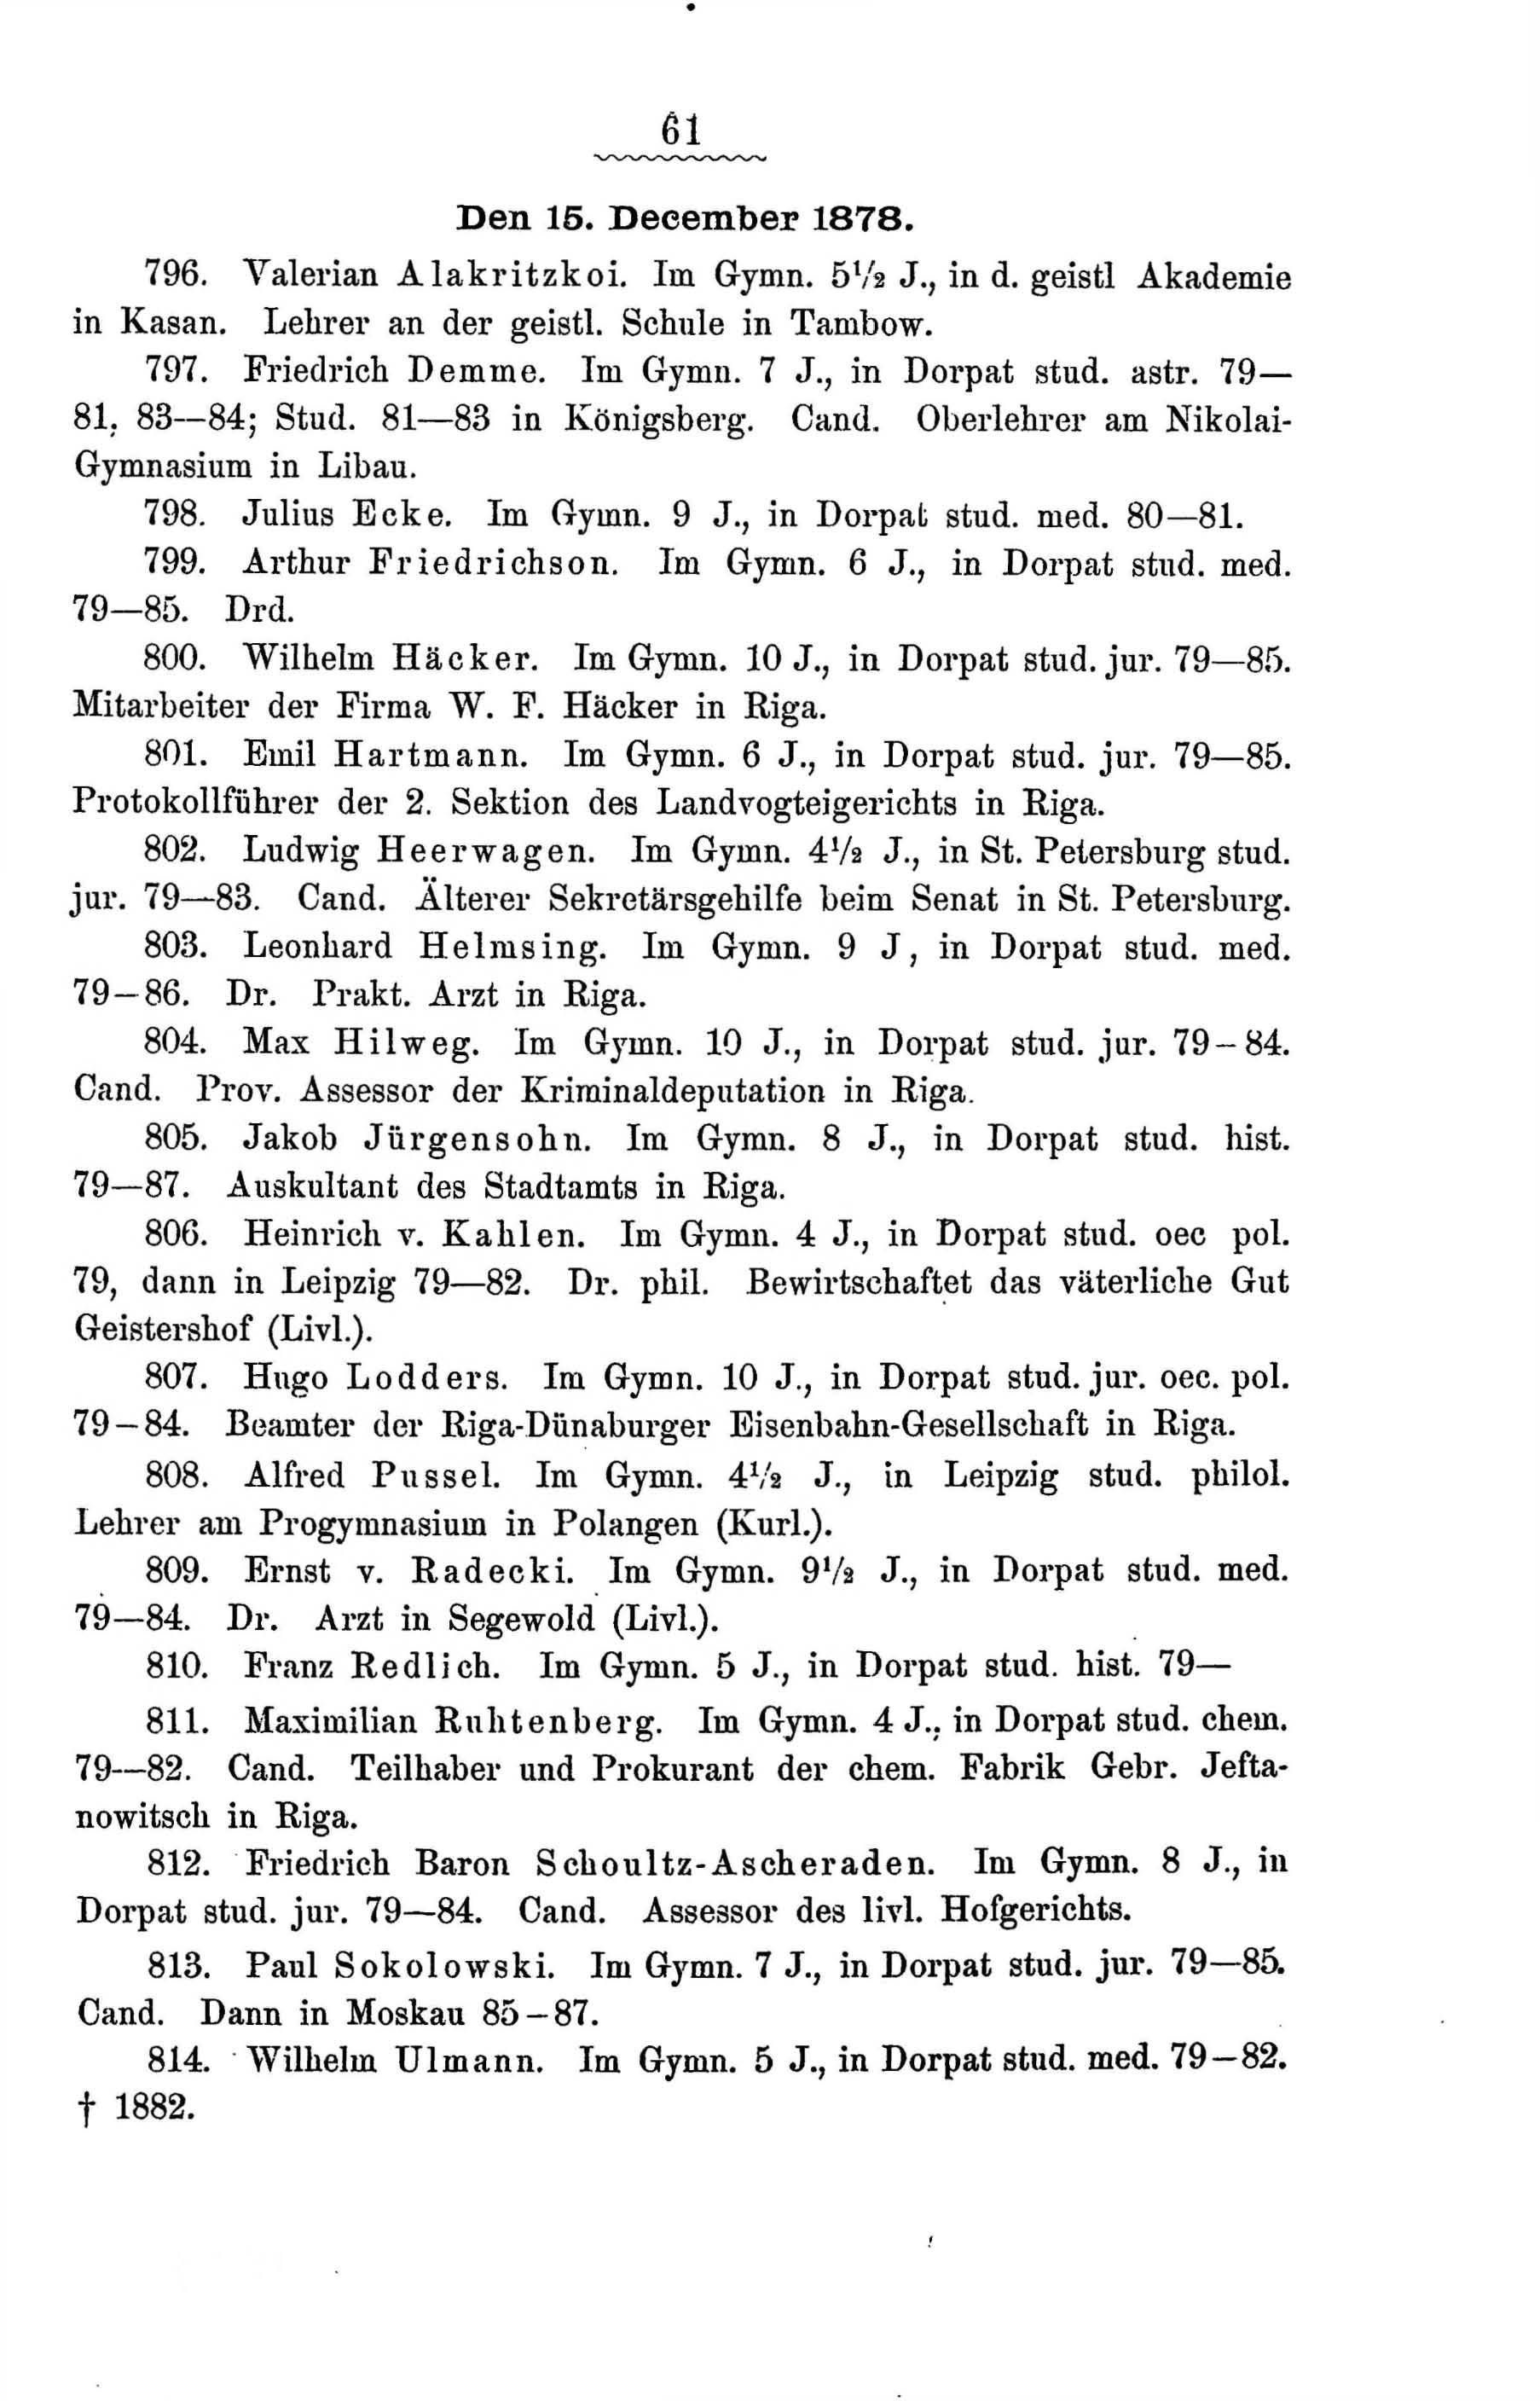 Zur Geschichte des Gouvernements-Gymnasiums in Riga (1888) | 114. Основной текст